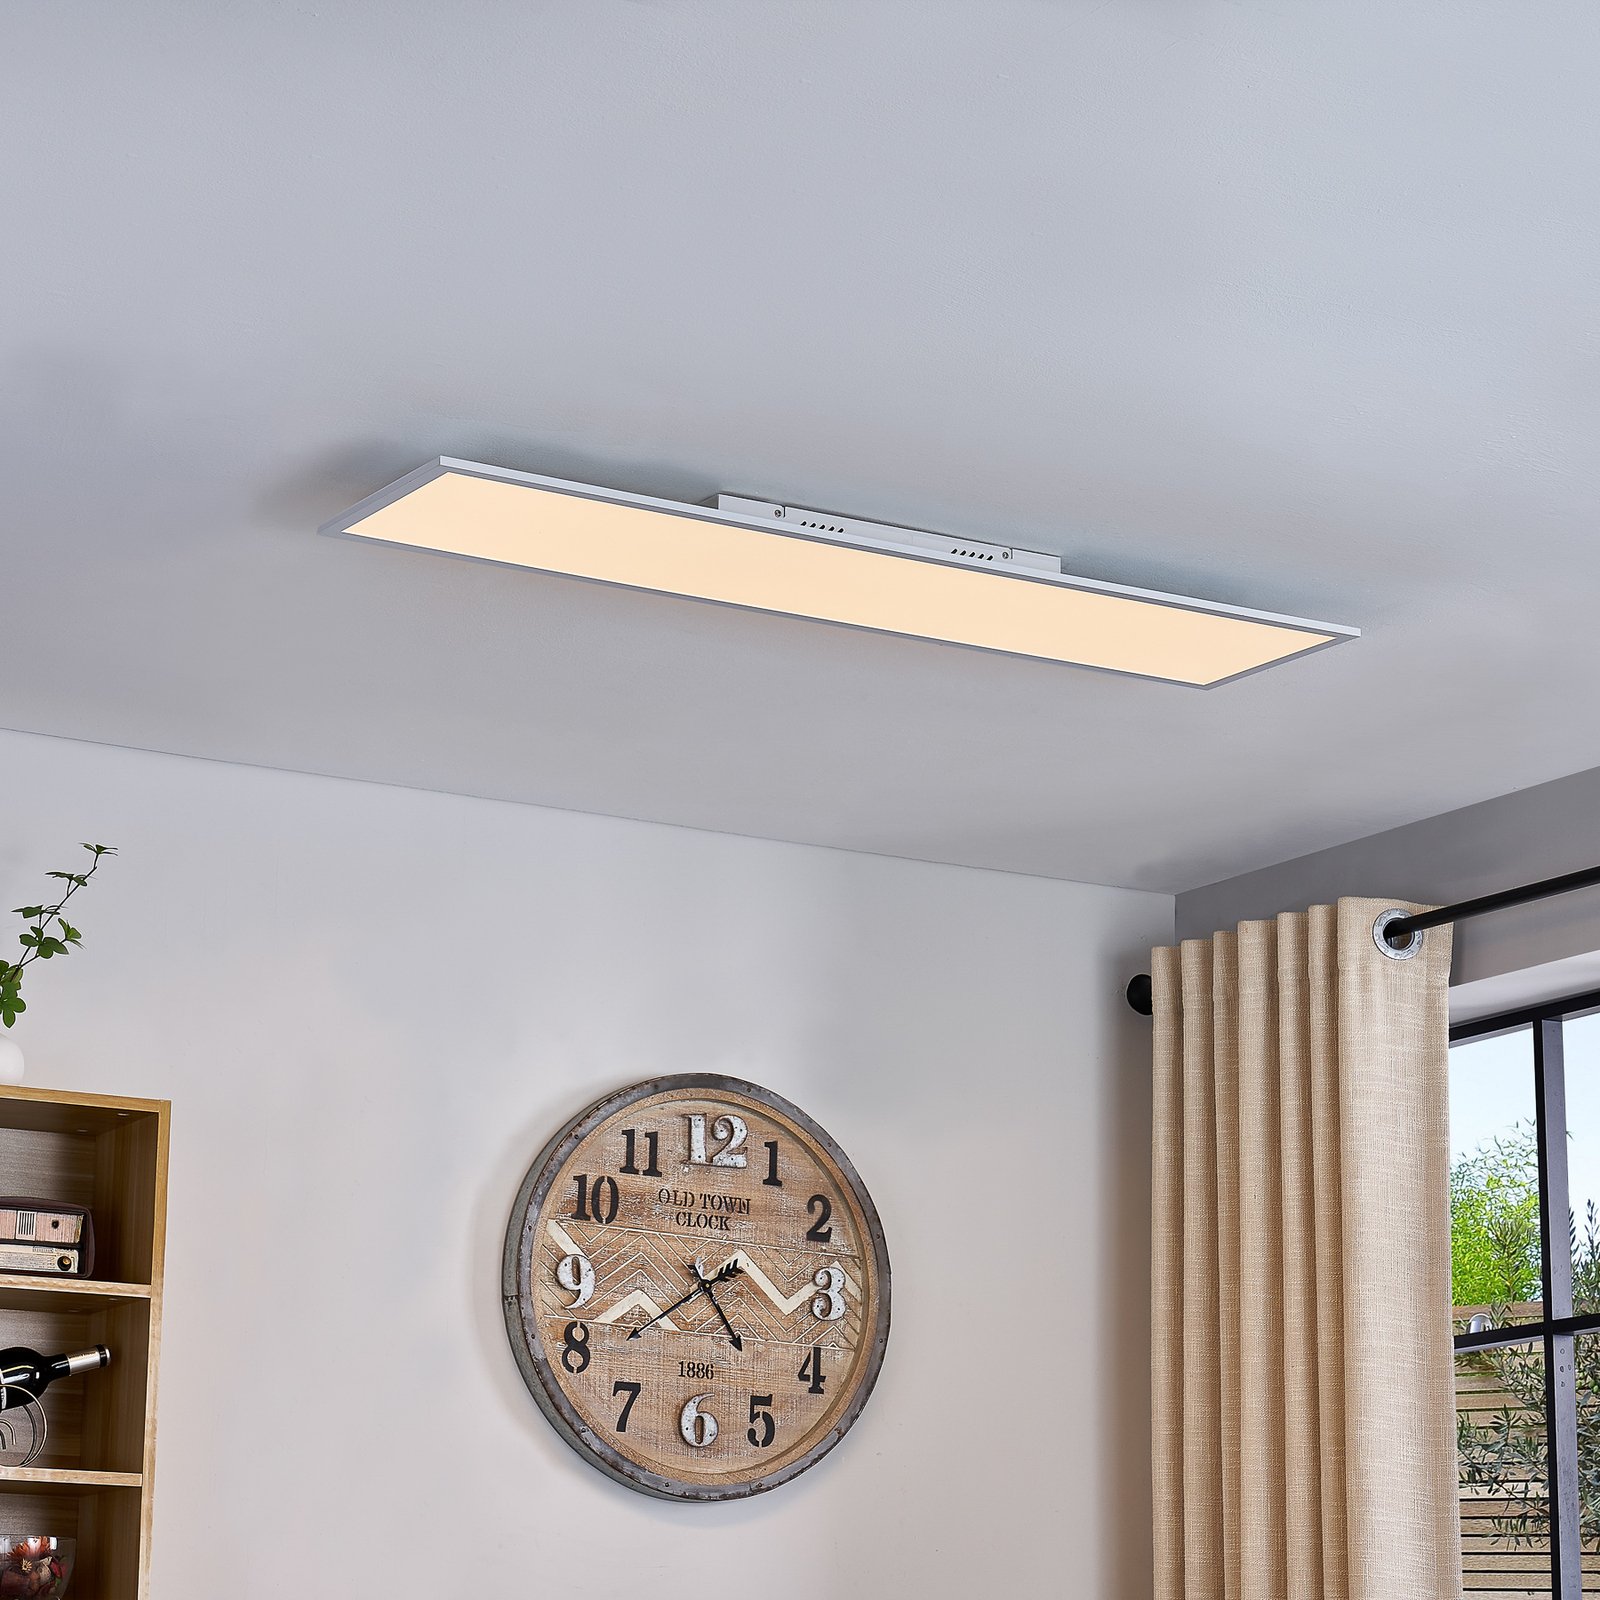 Lindby Lamin LED-Panel Rechteck weiß 119,5 cm